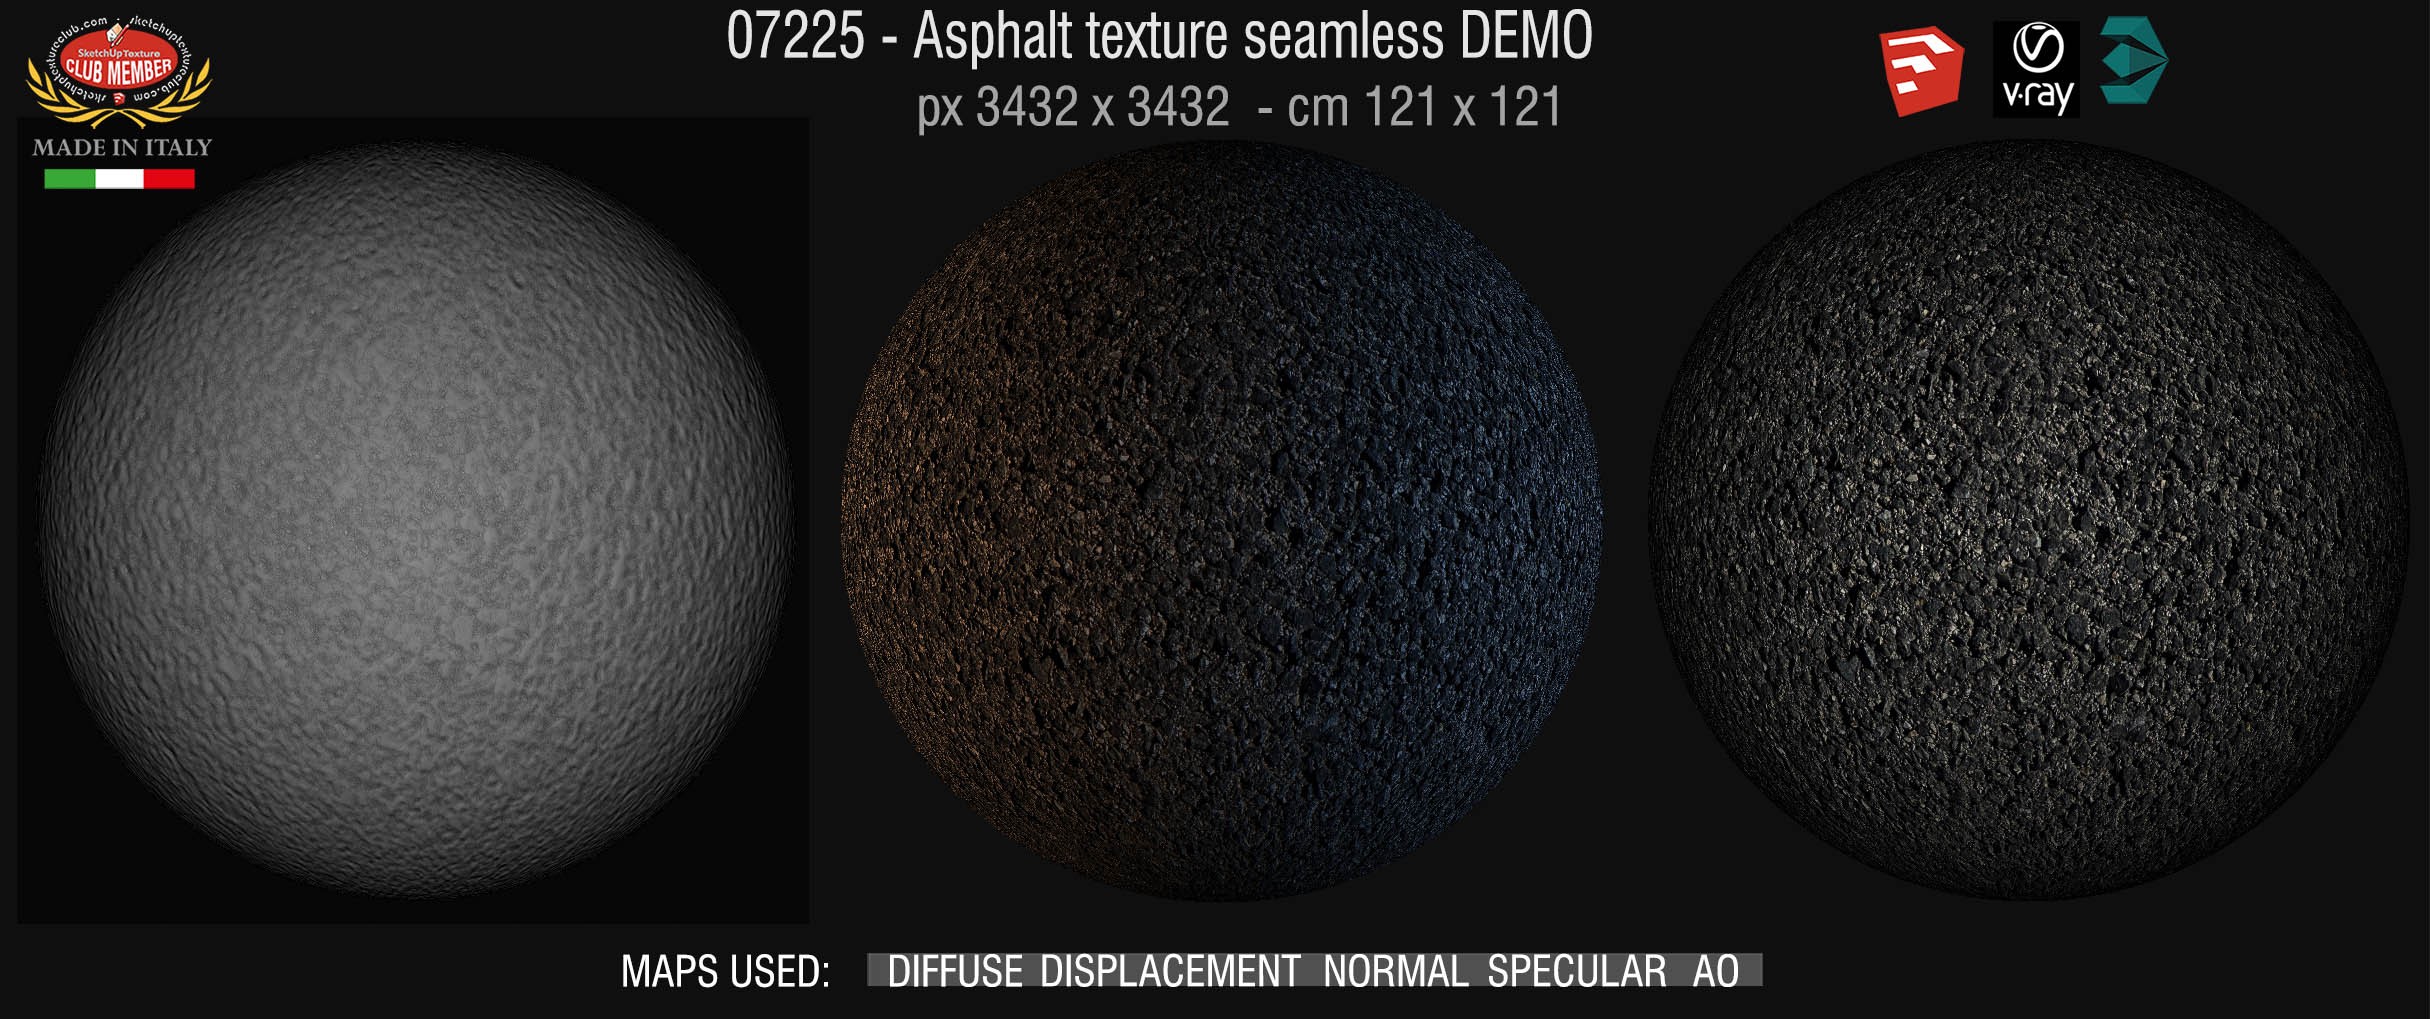 07225 Asphalt texture seamless + maps DEMO